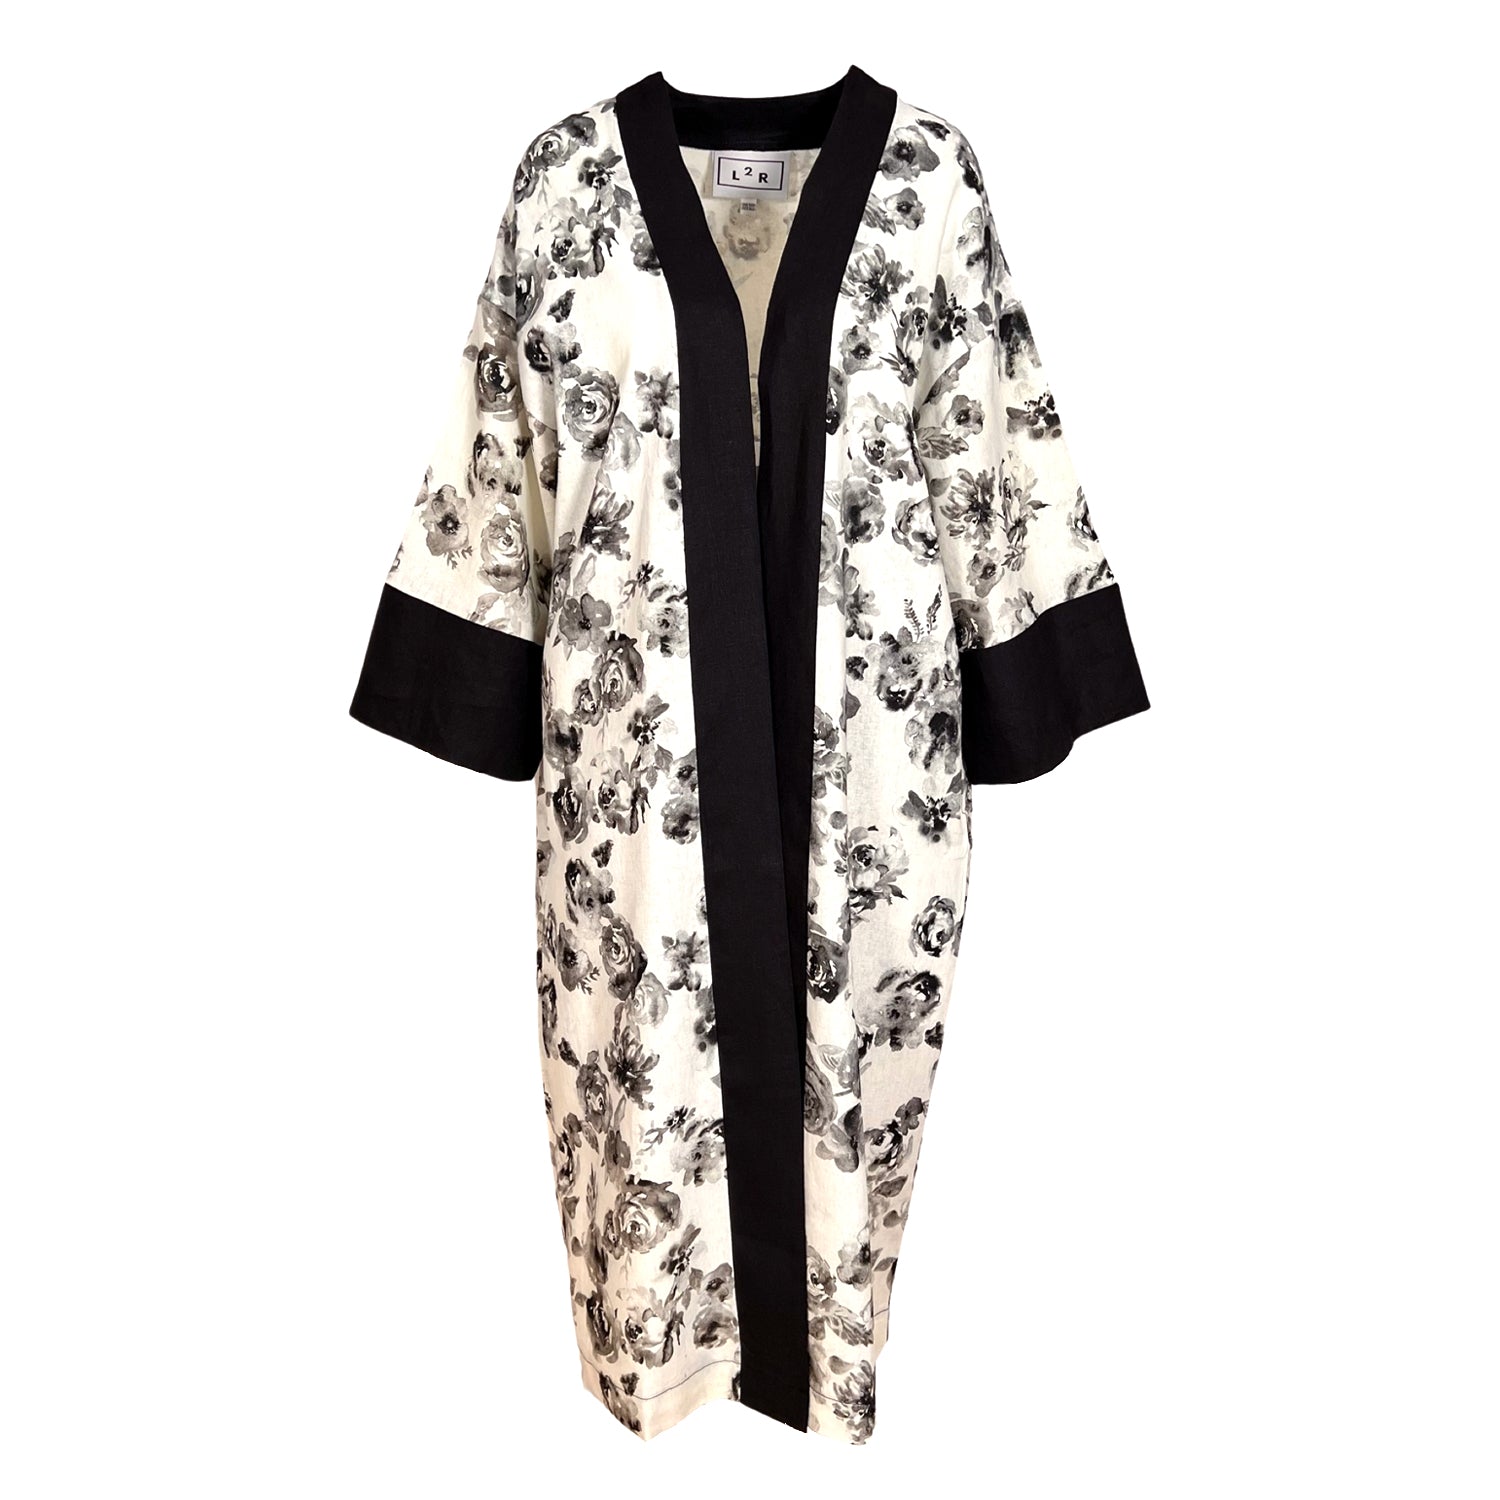 L2r The Label Women's Black / White Kaftan Kimono - Black & White Rose Print In Multi